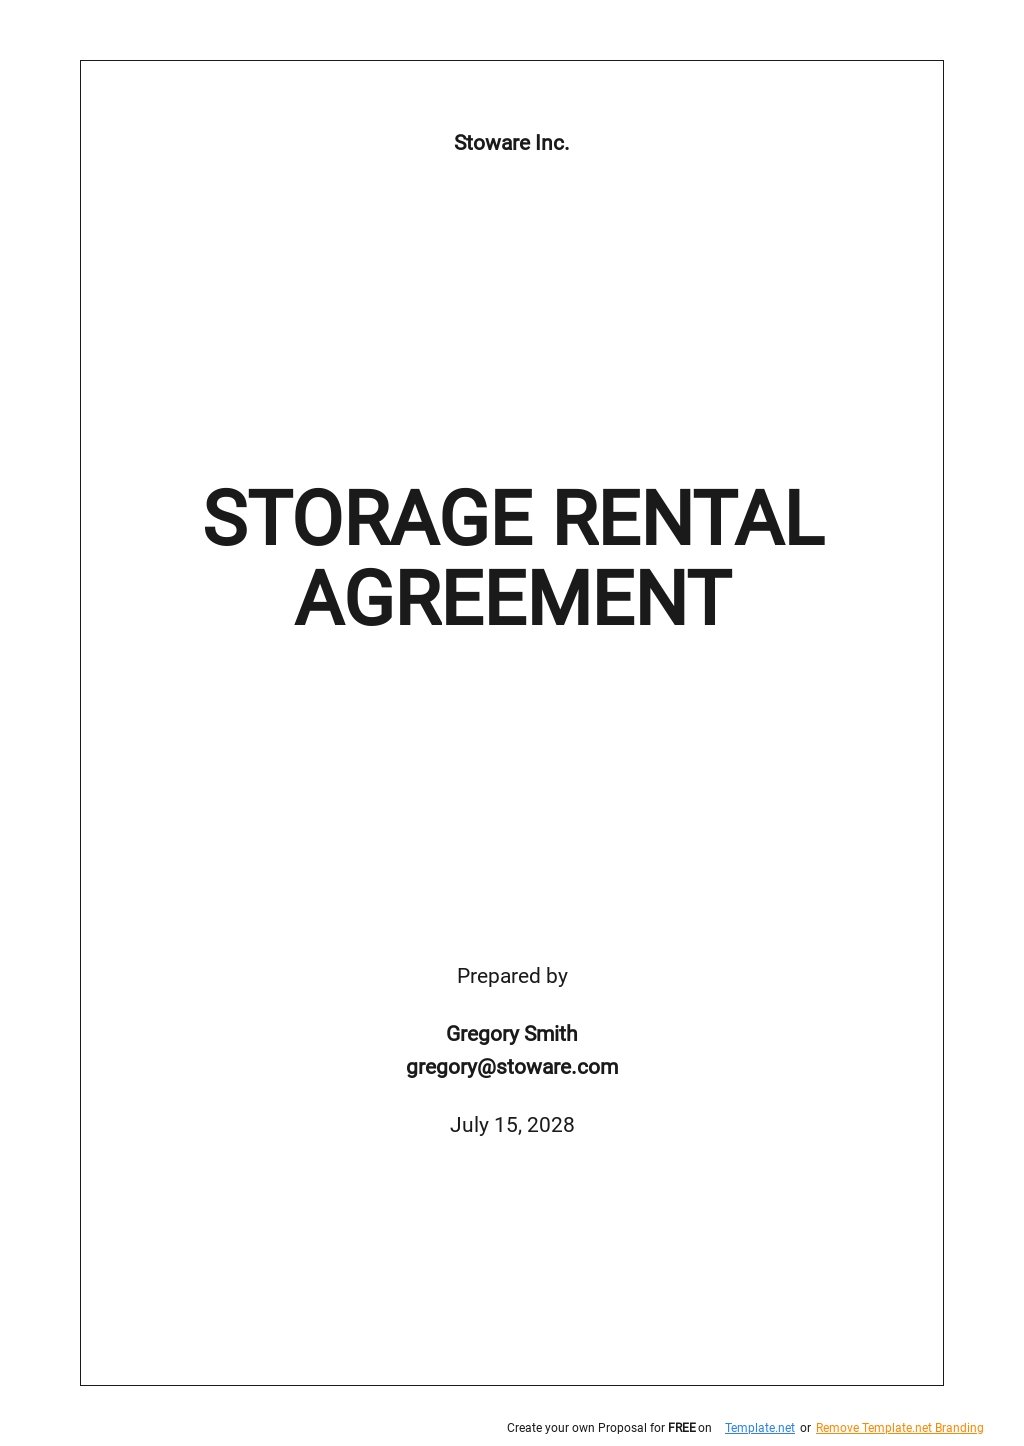 Storage Rental Agreement Template